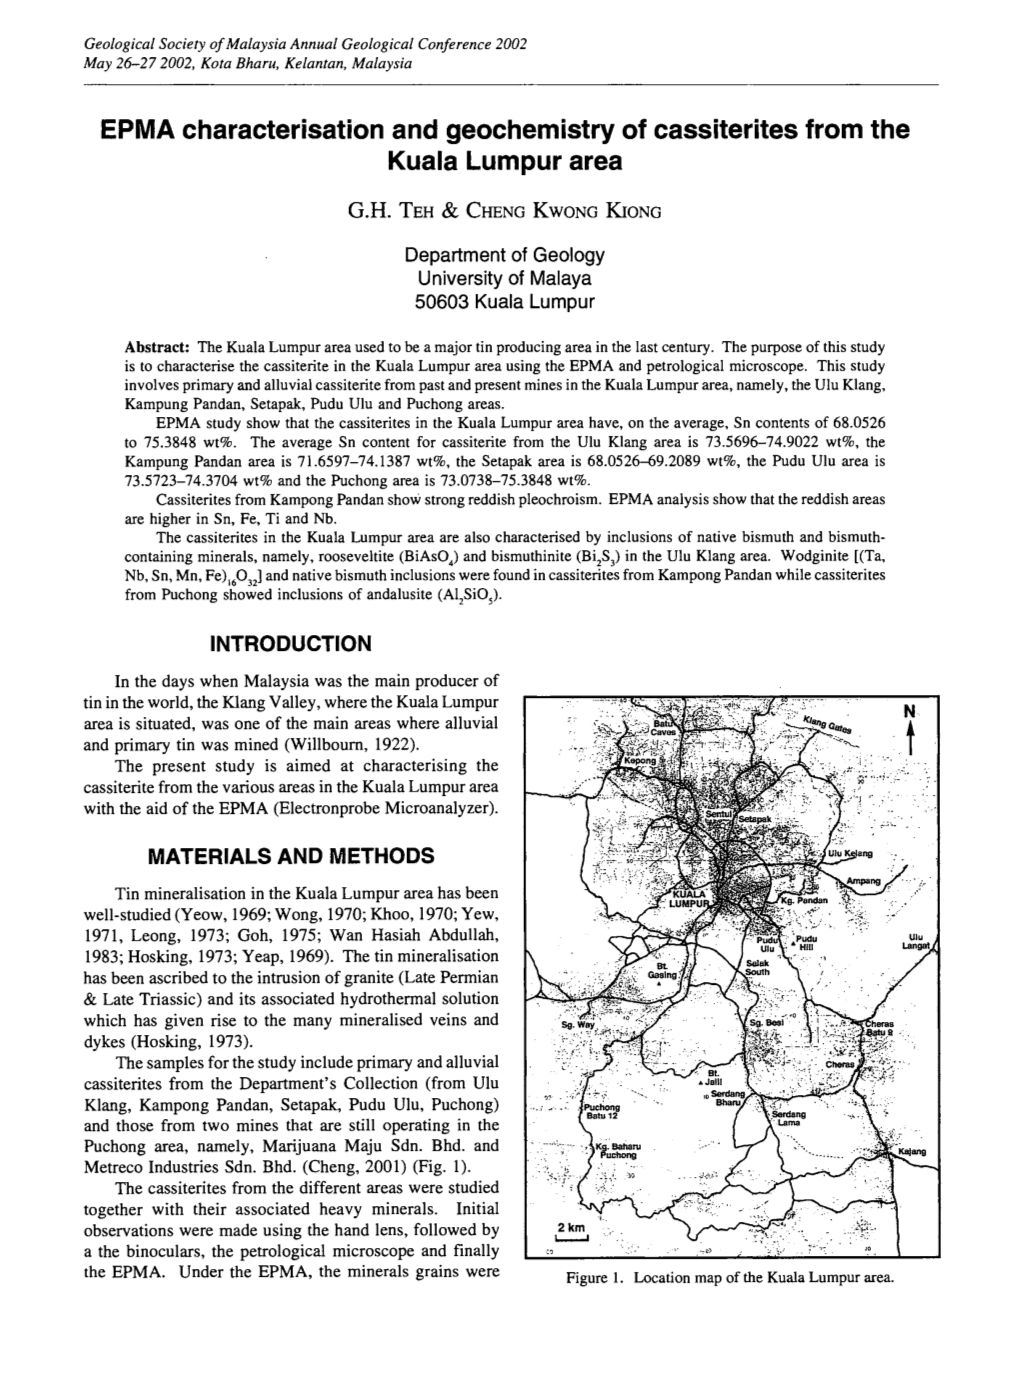 EPMA Characterisation and Geochemistry of Cassiterites from the Kuala Lumpur Area